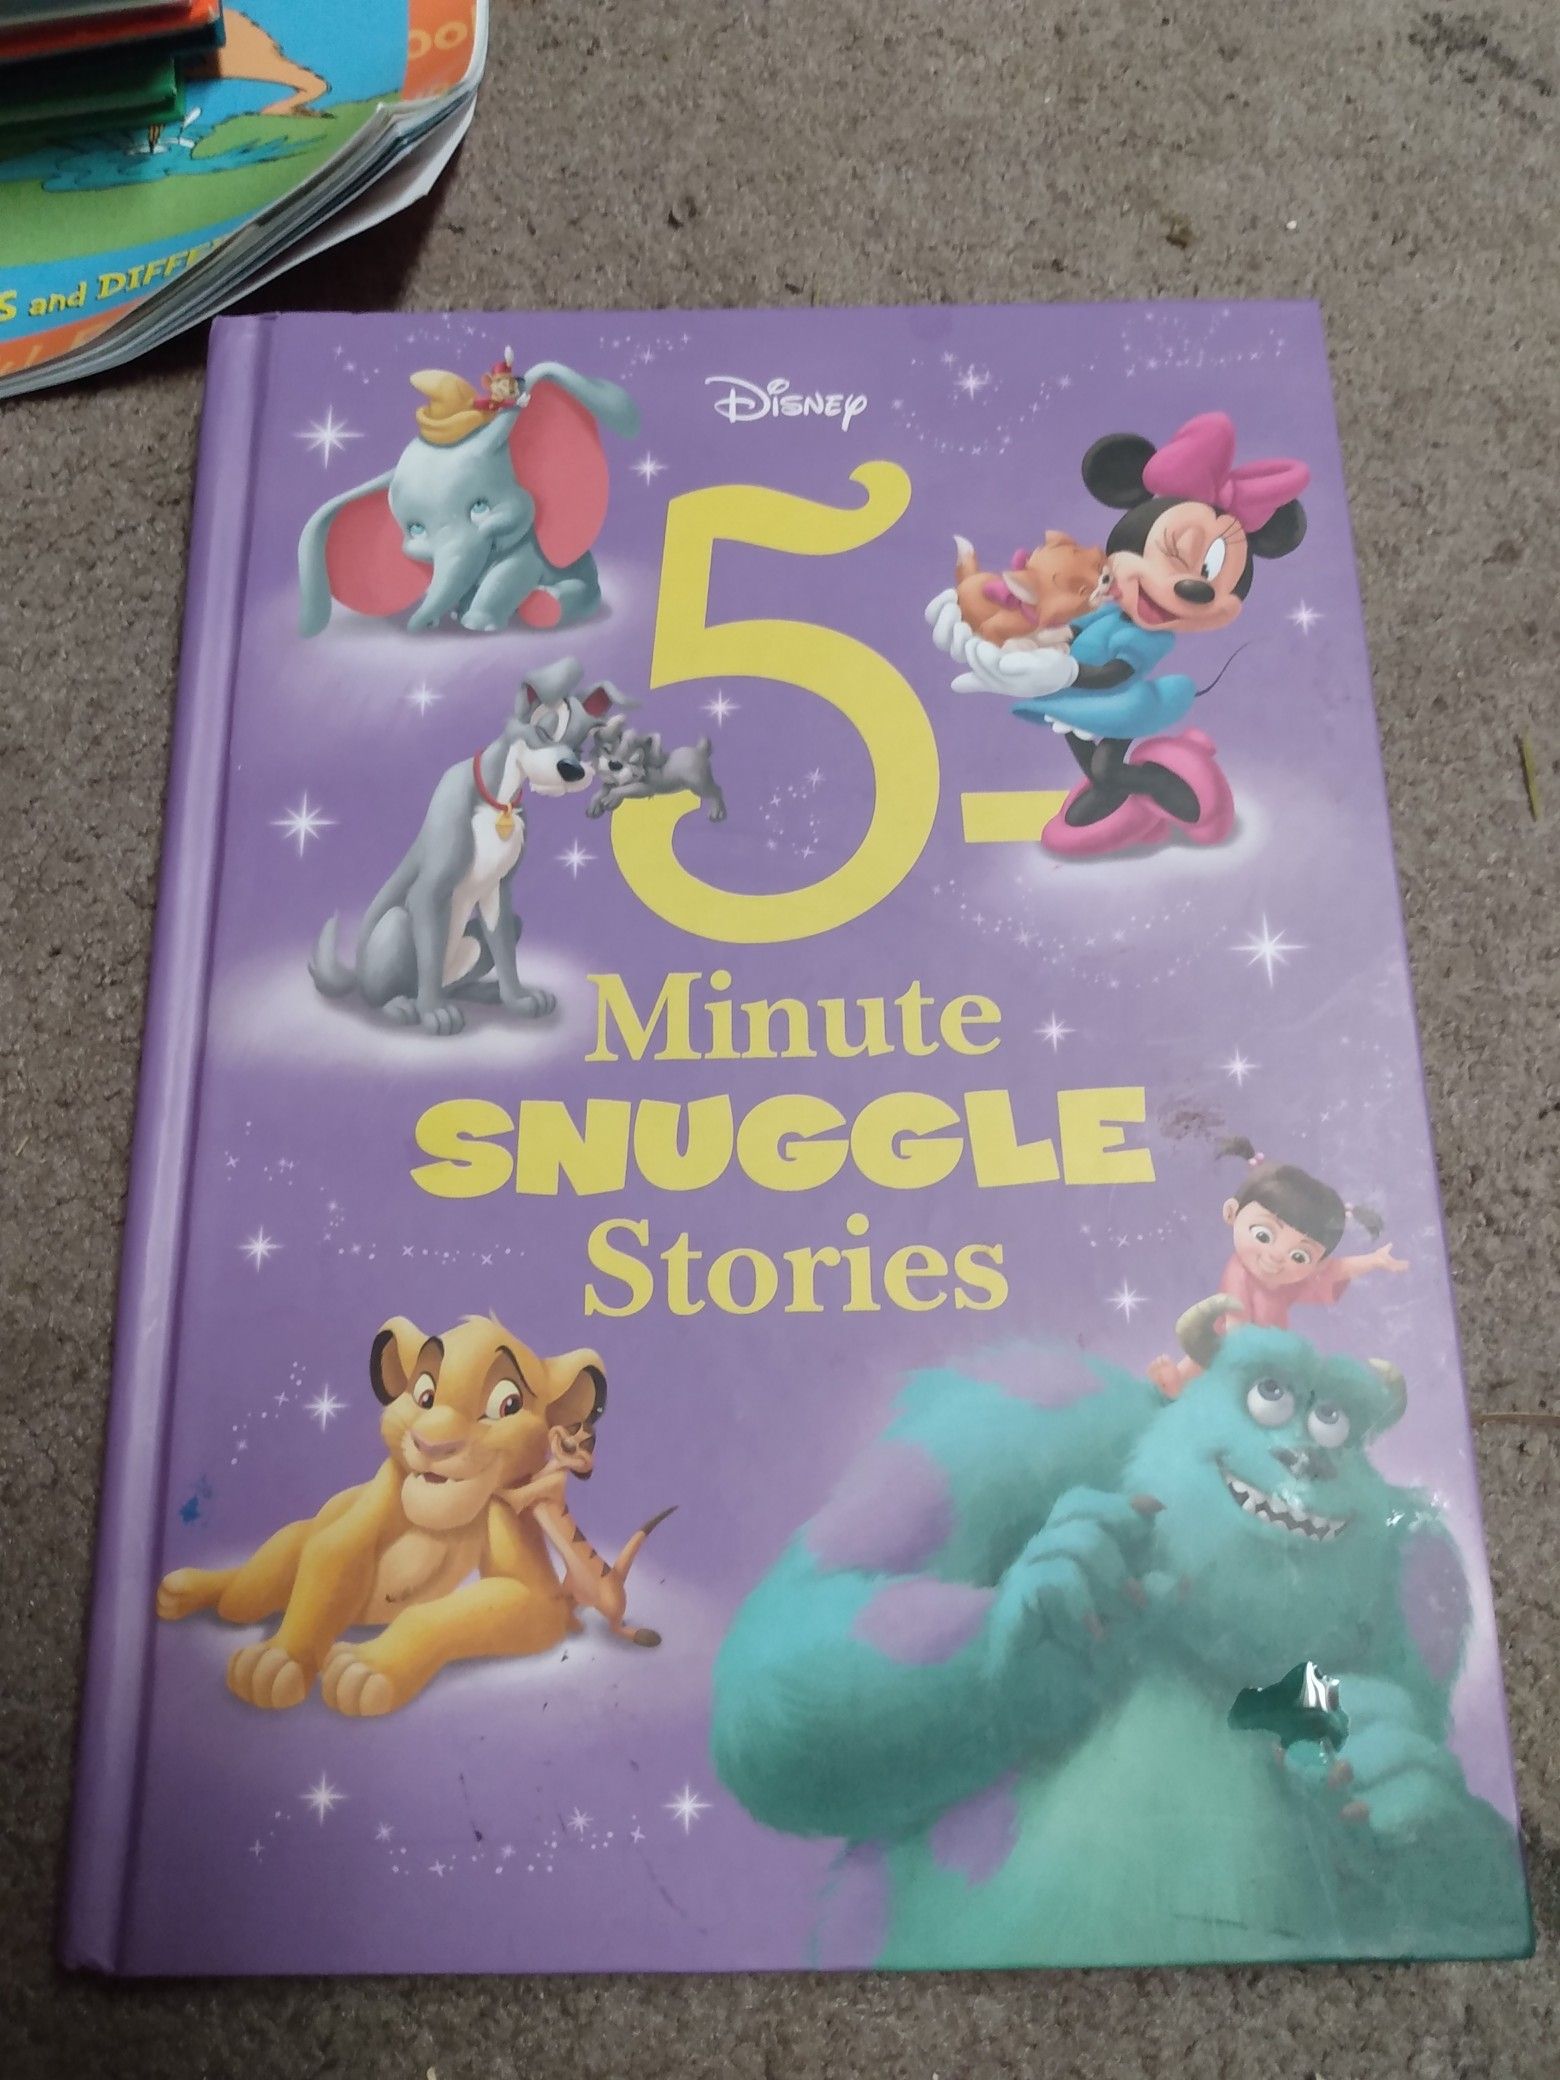 Disney short stories